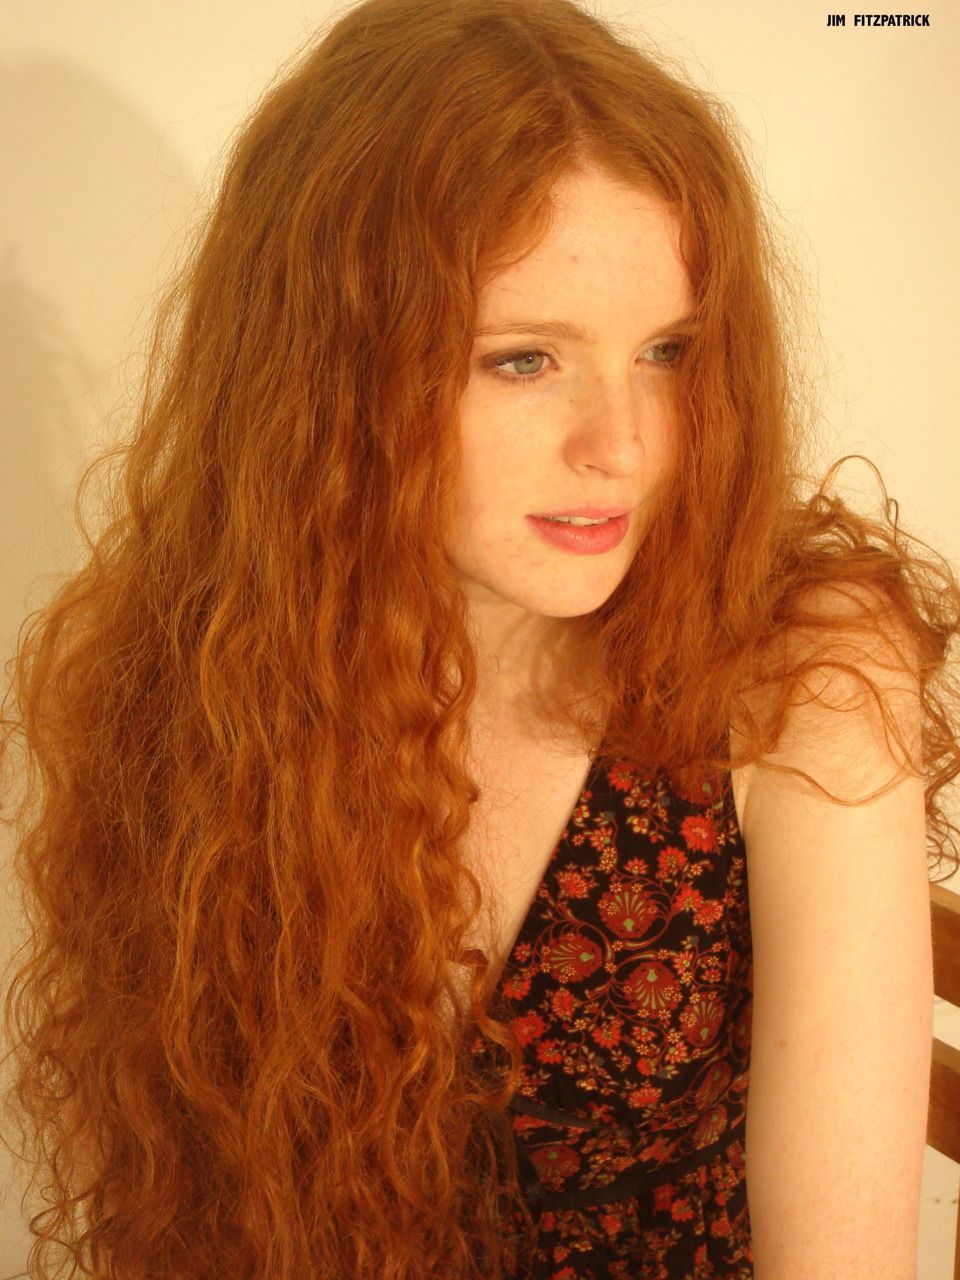 Irish redhead woman photos erotic image